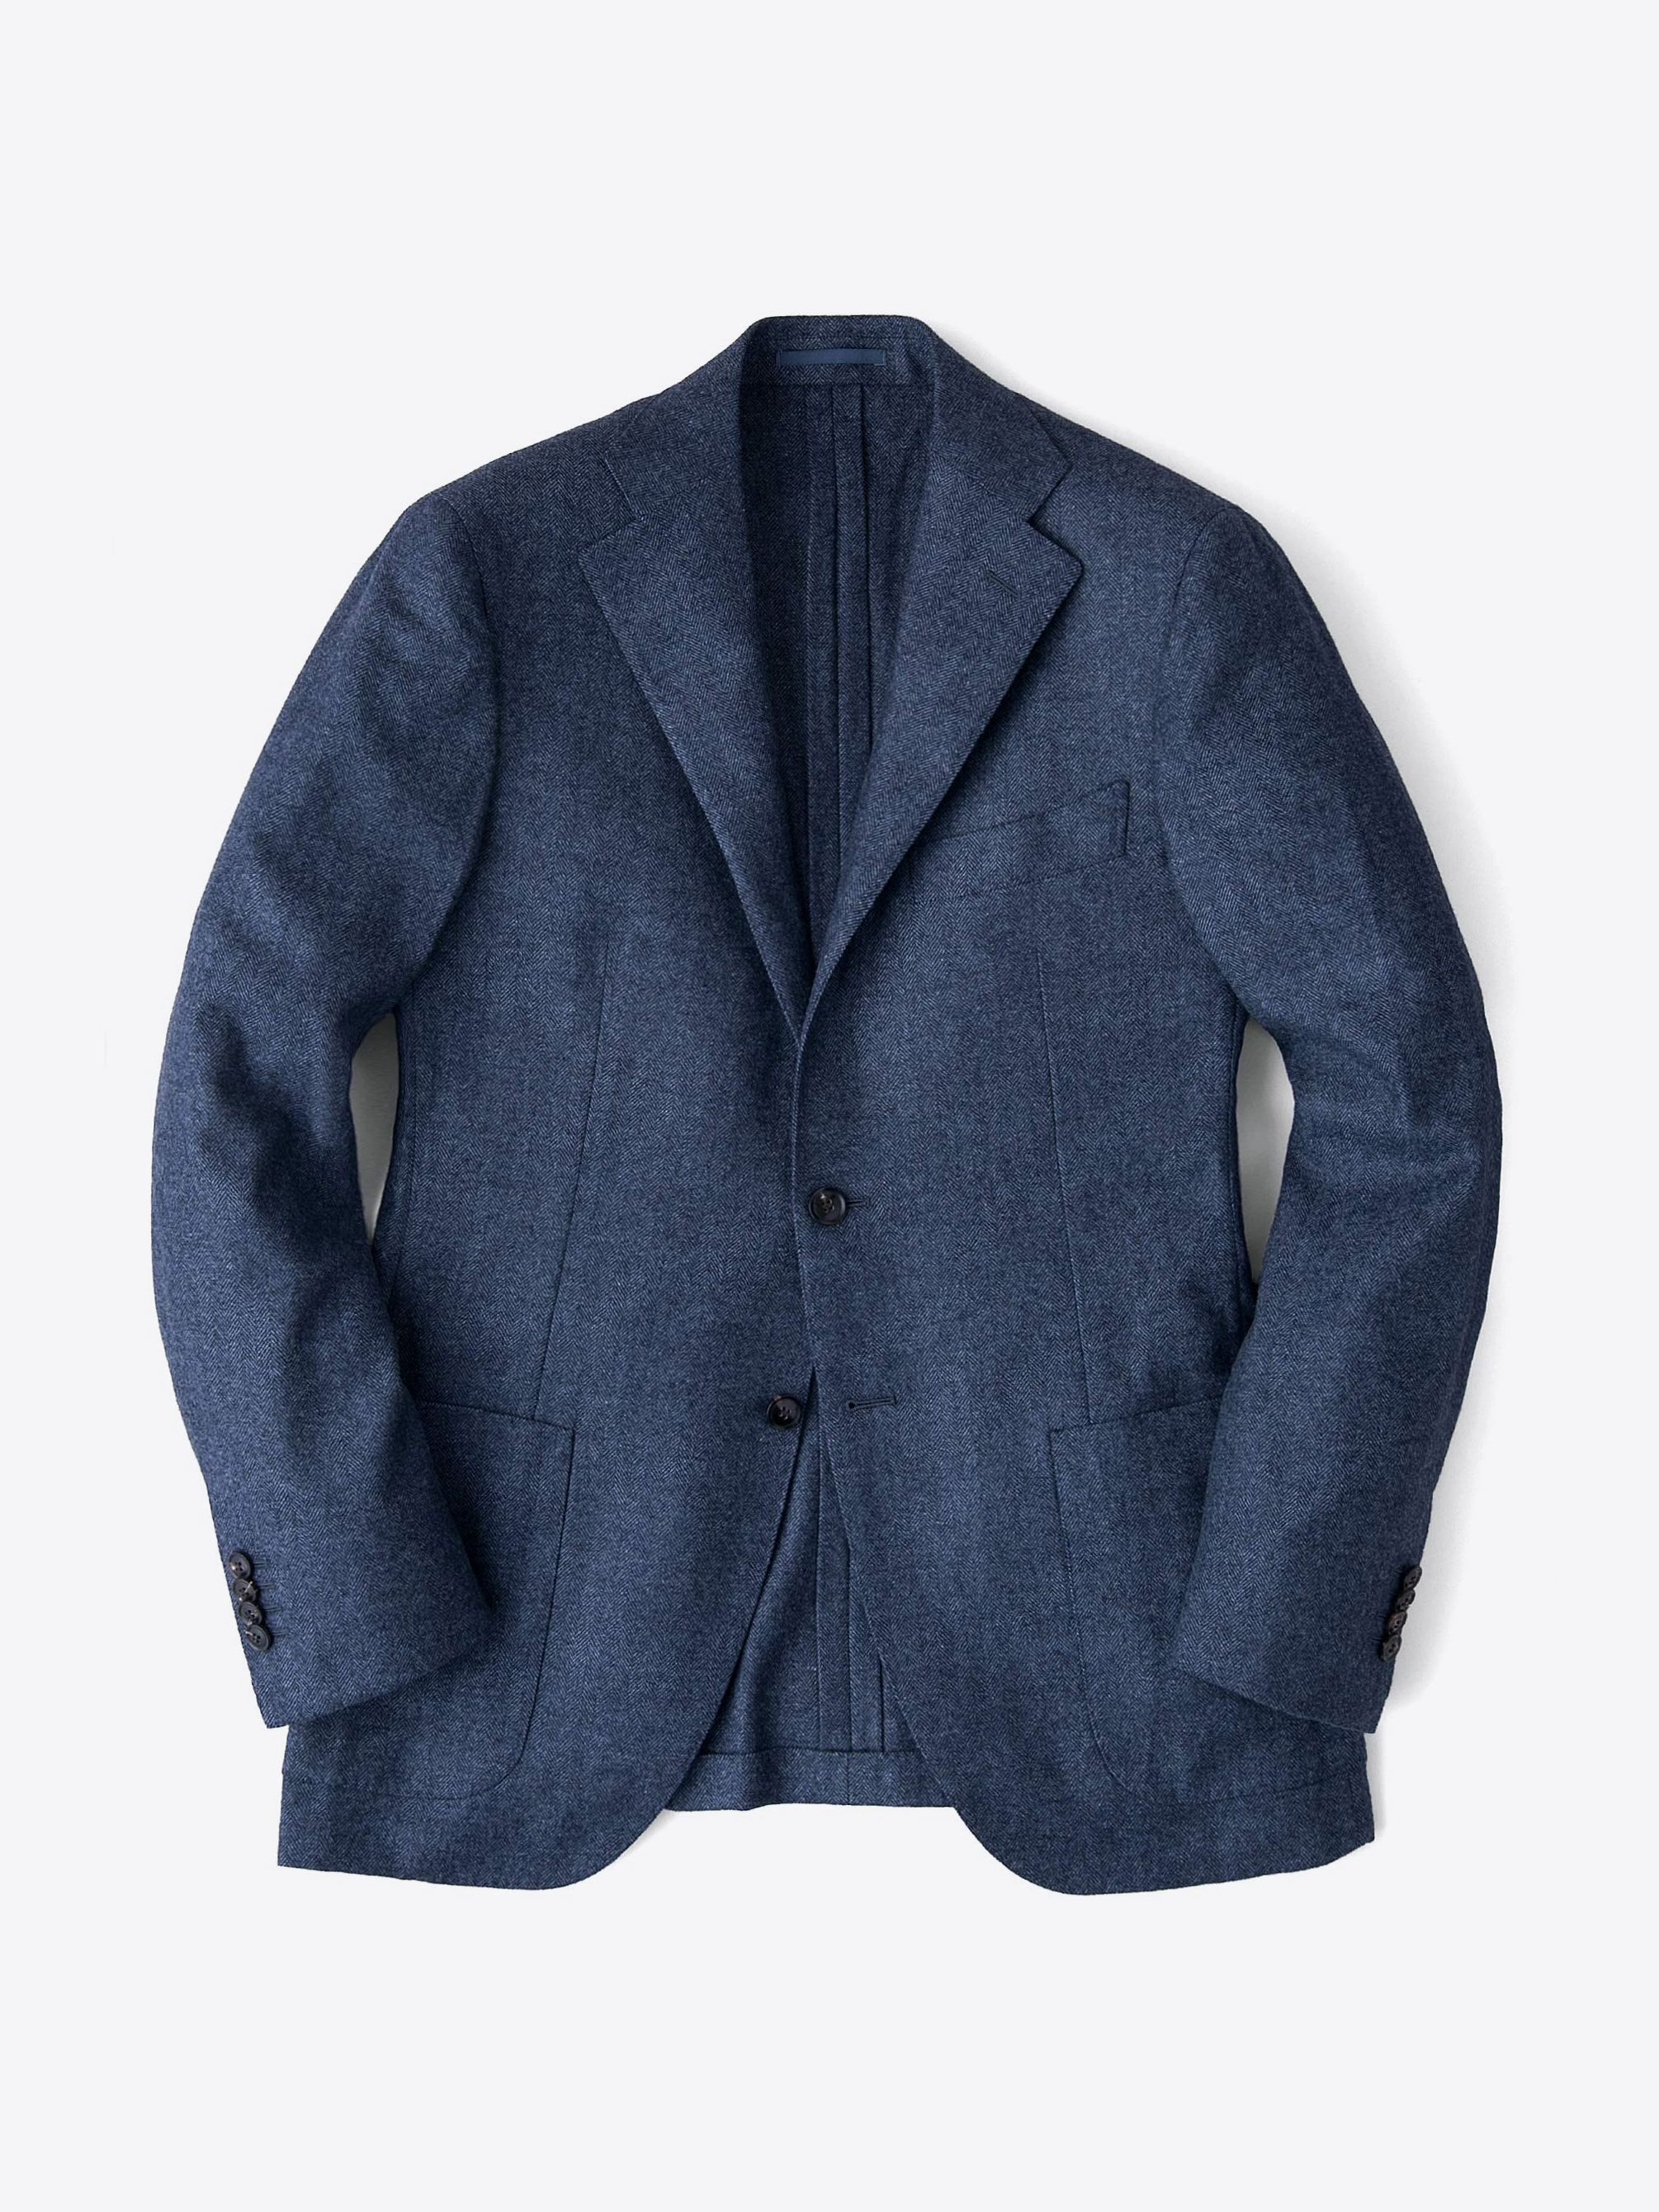 Zoom Image of Slate Wool Cashmere Herringbone Hudson Jacket